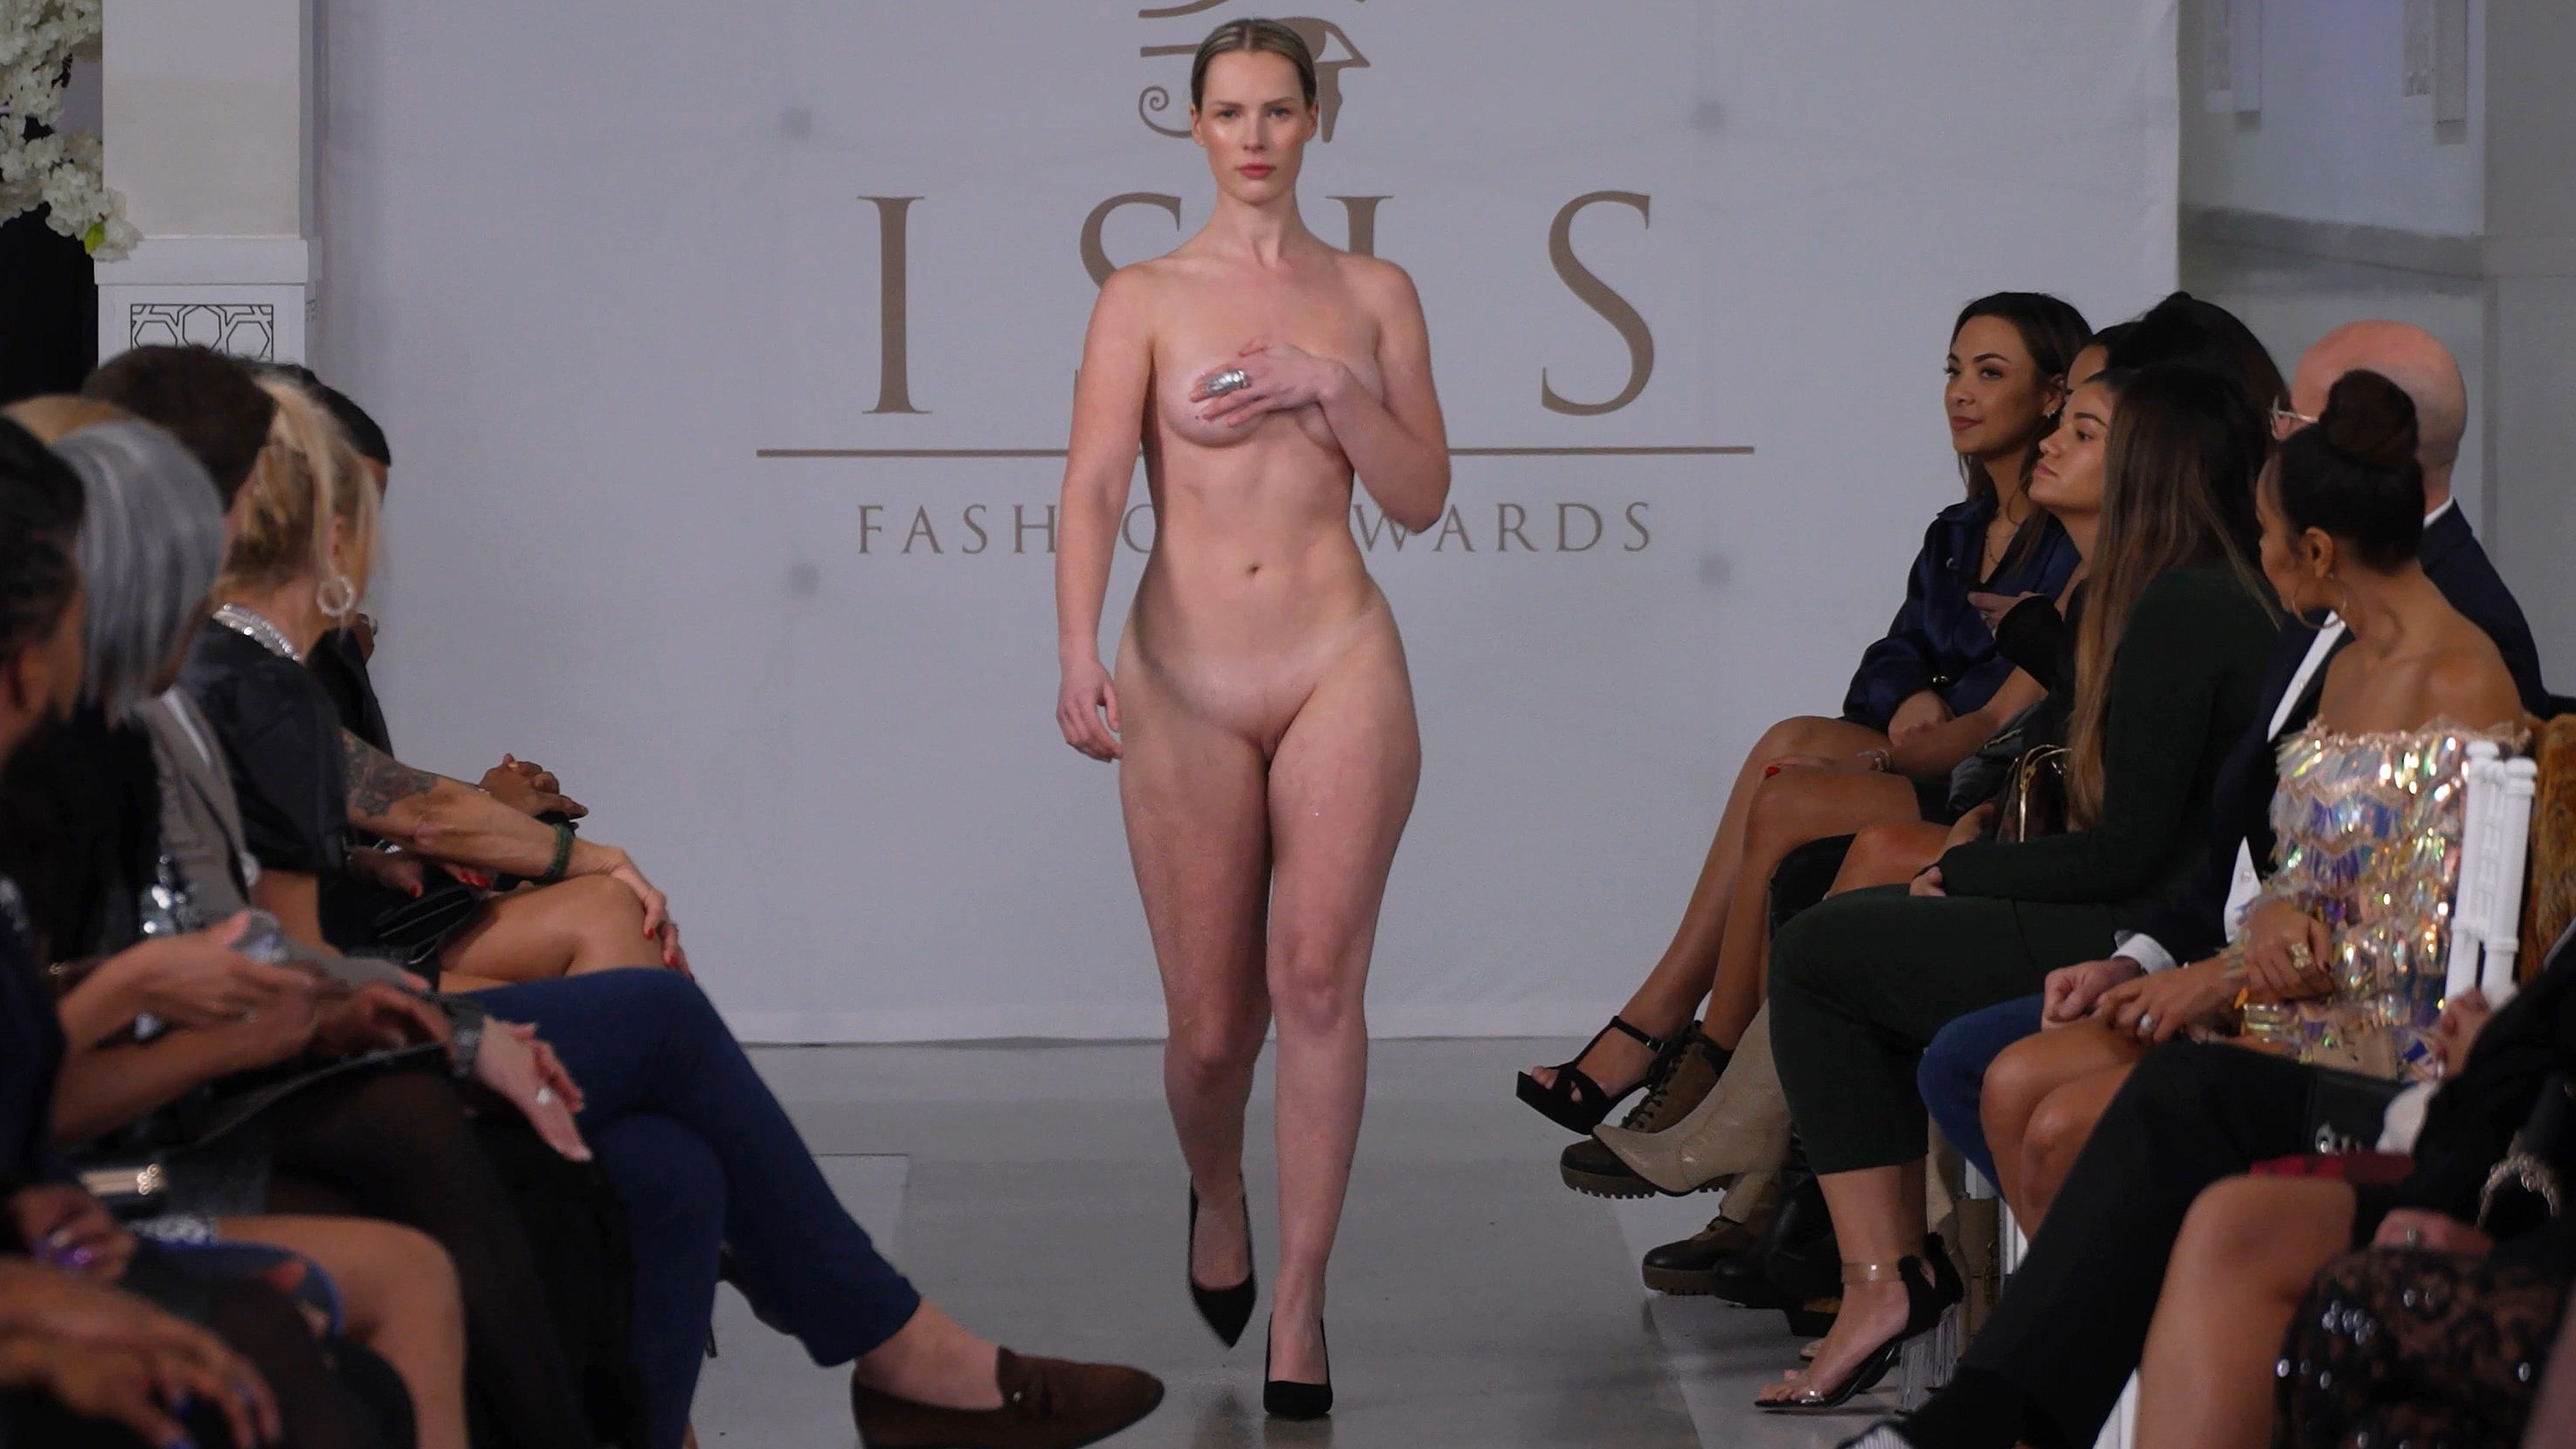 Nude Fashion - Nude Models Fashion Show - Isis Fashion Awards - TV - ThisVid.com